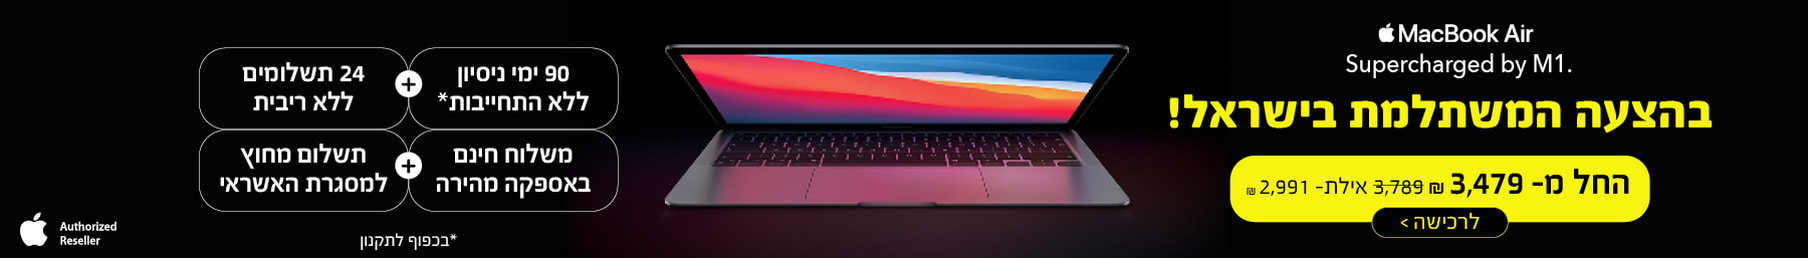 MacBook Pro. Pro to the max .  מגוון מחשבי Mac משודרגים .